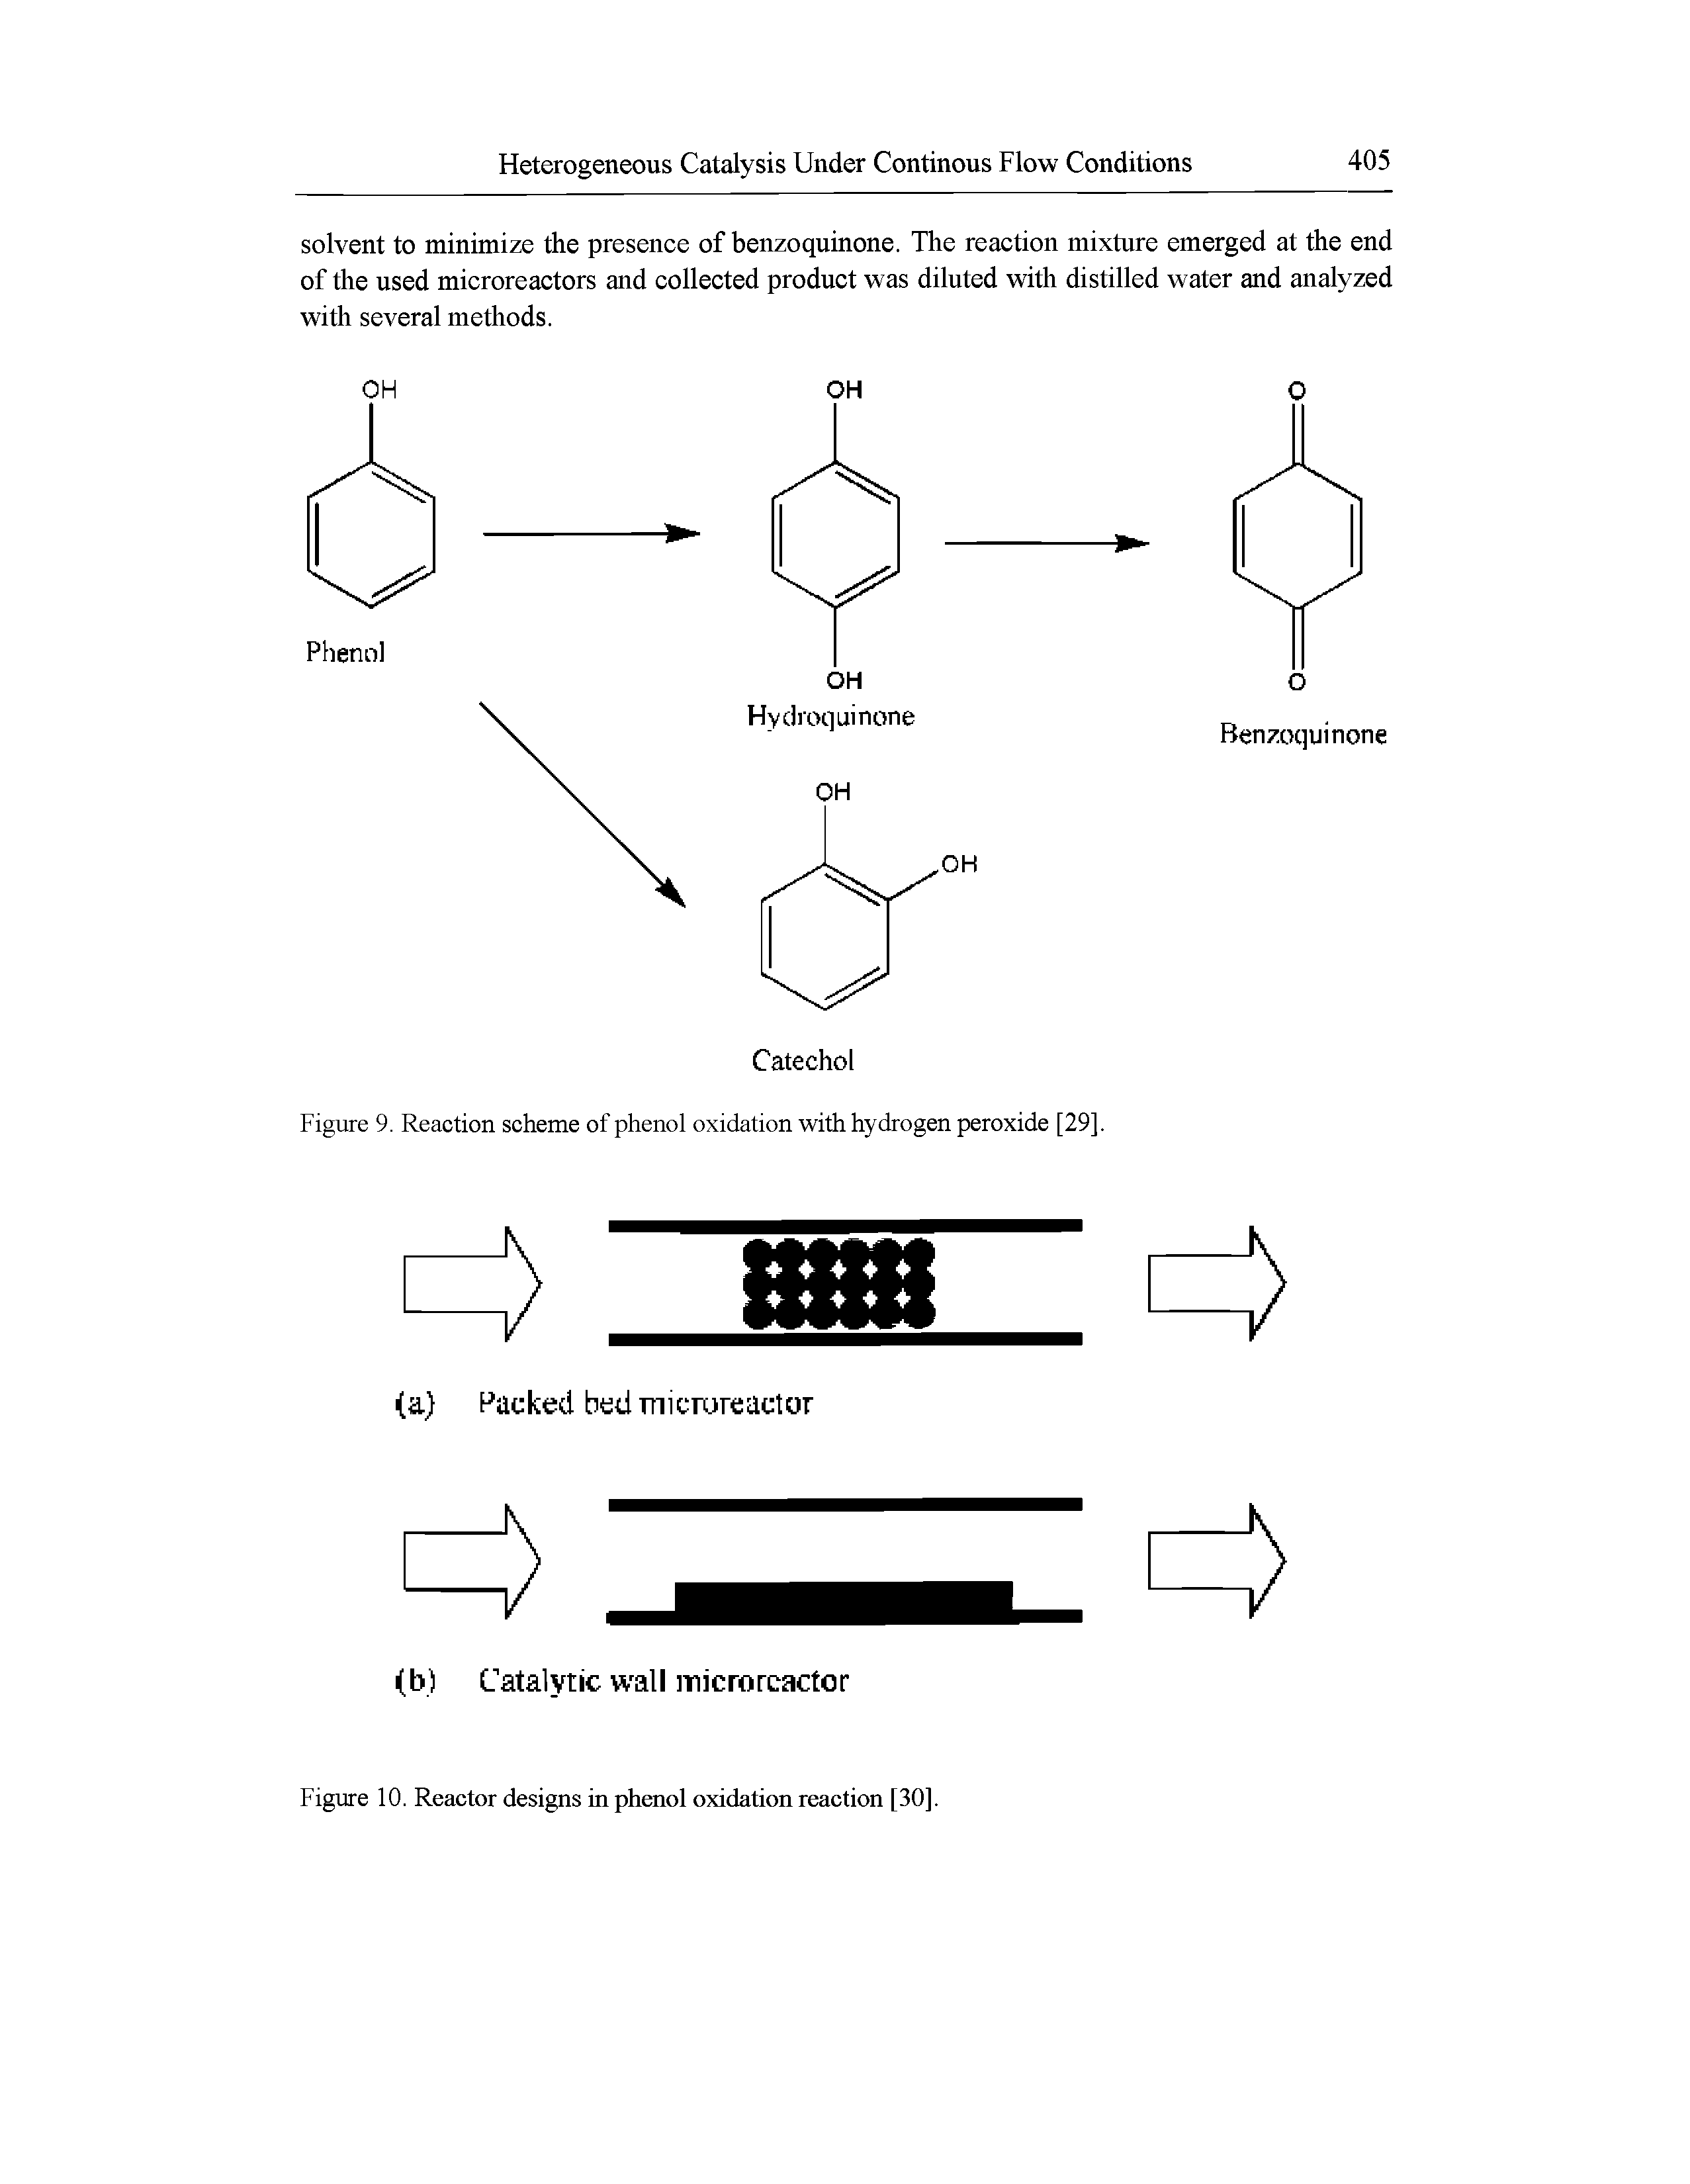 Figure 10. Reactor designs in phenol oxidation reaction [30].